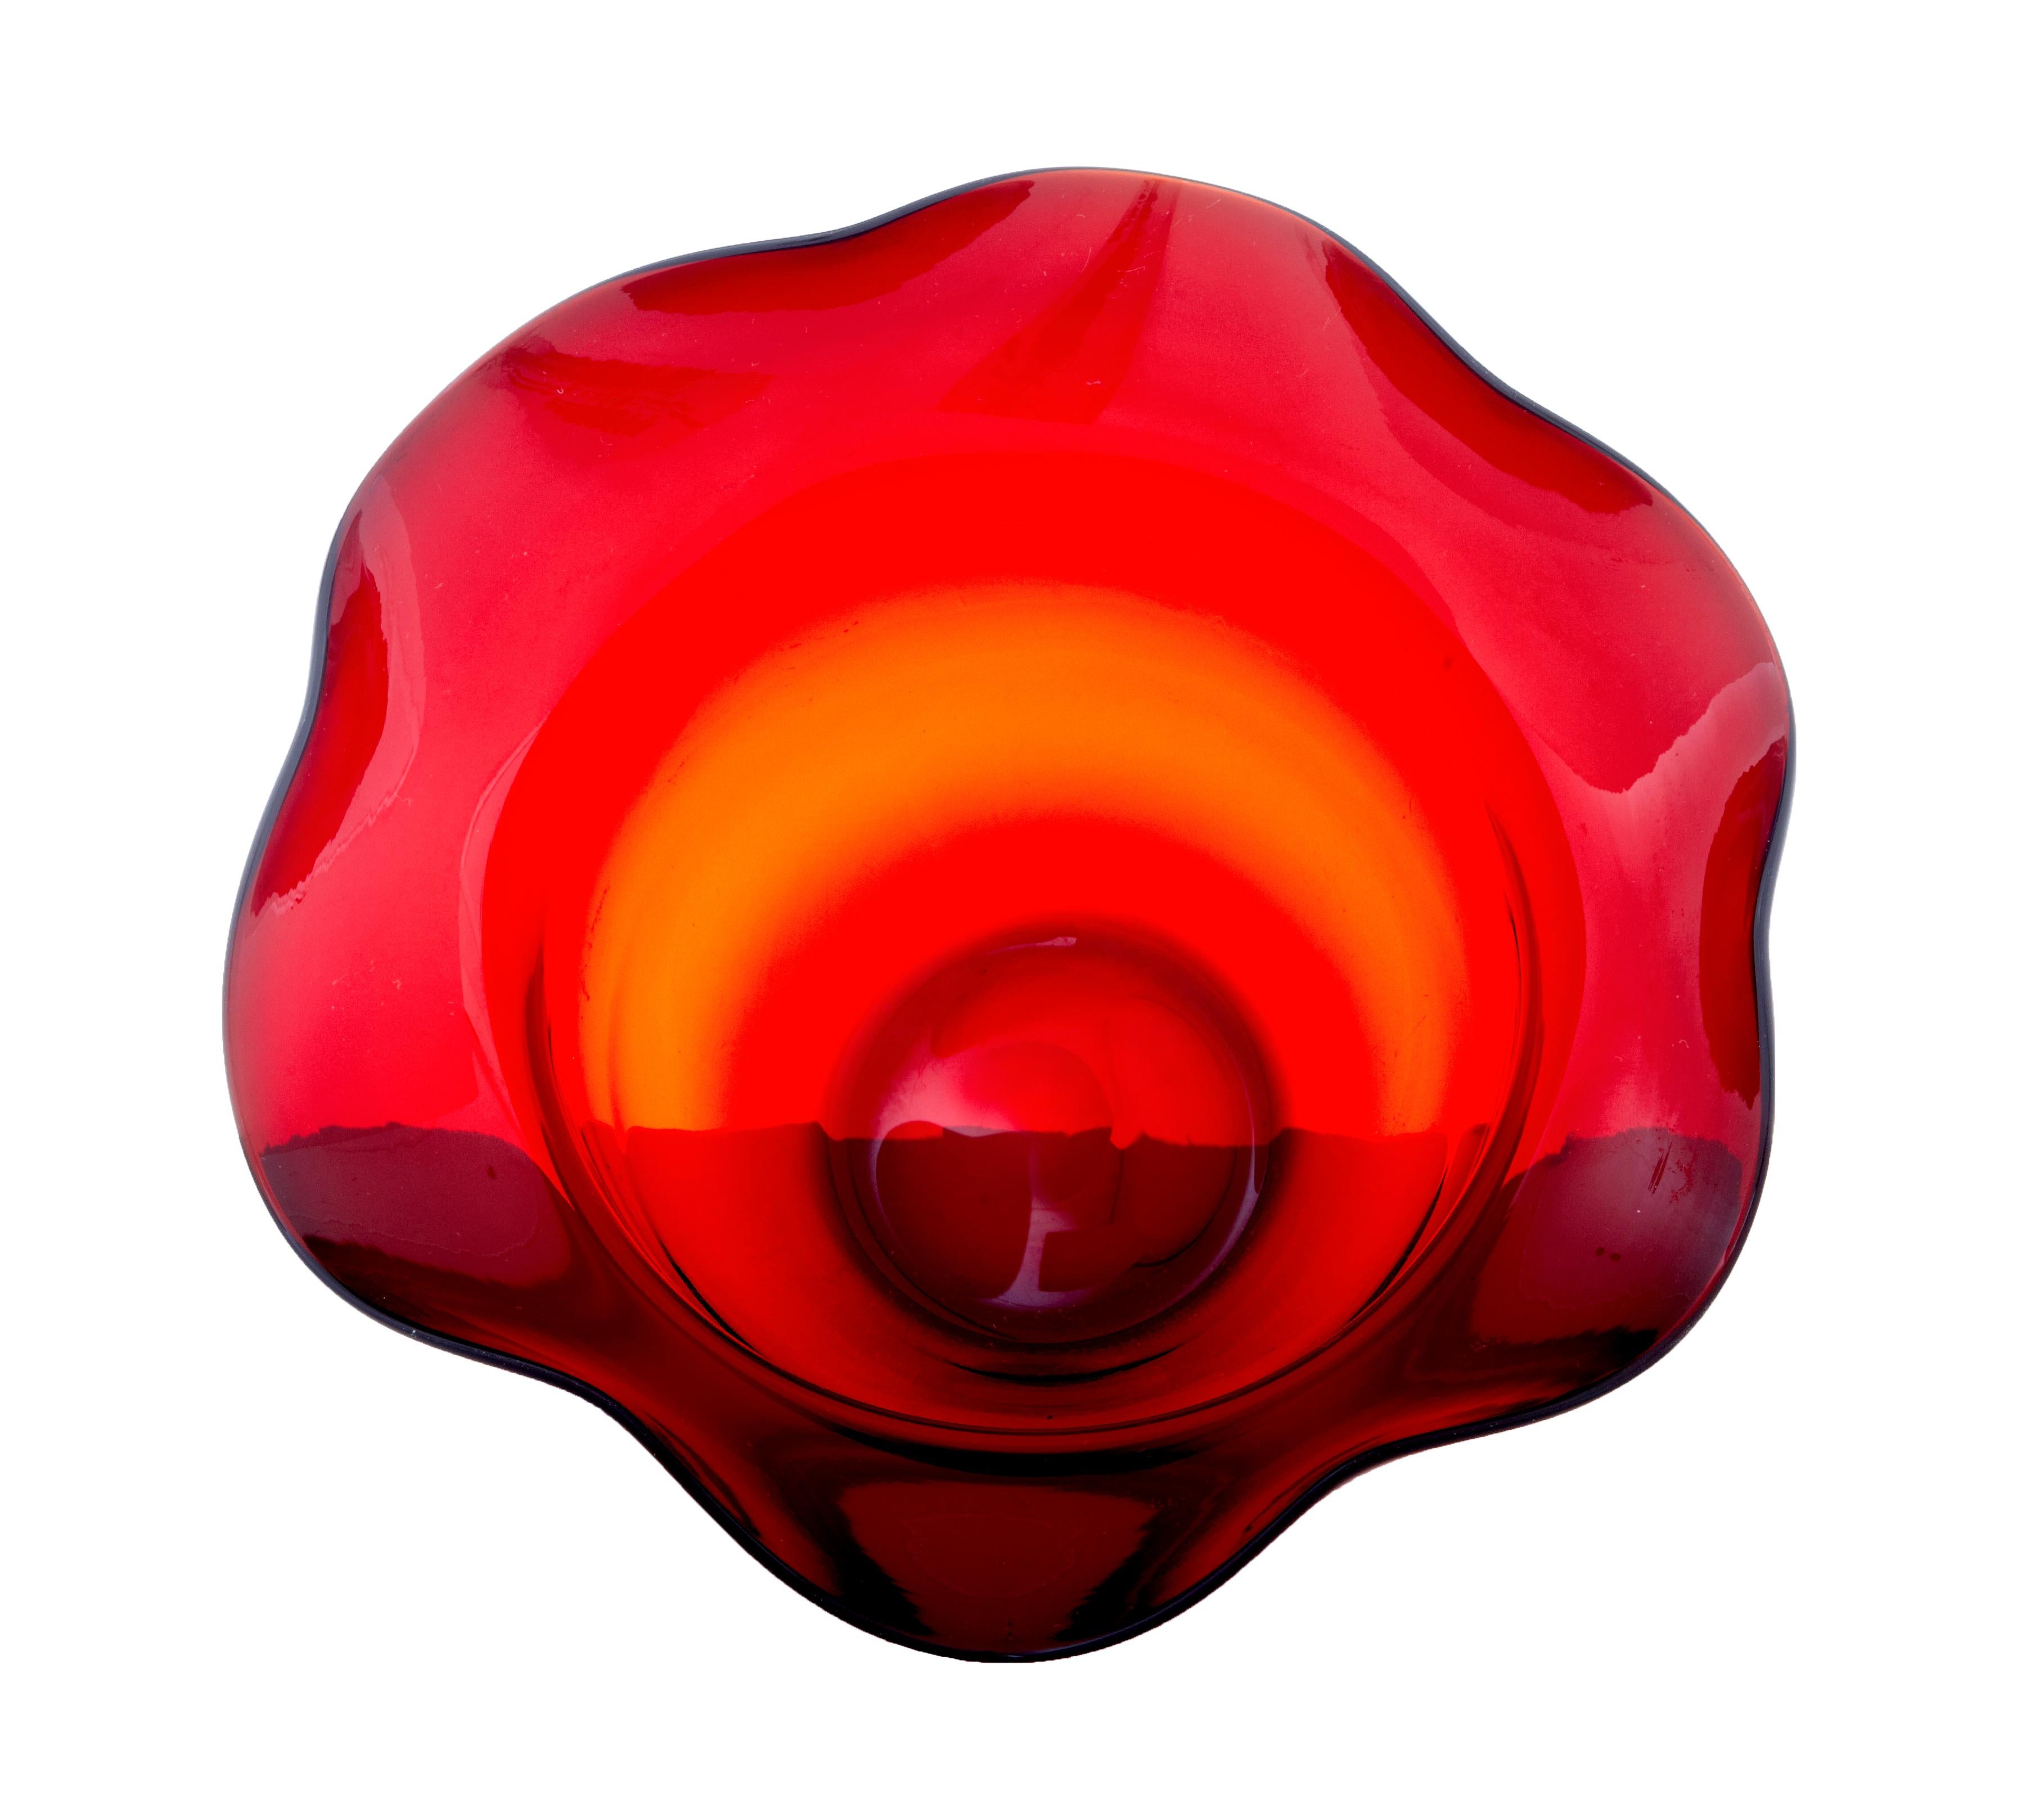 Mid-Century Modern Mid 20th century shaped red art glass vase by Monica Bratt For Sale